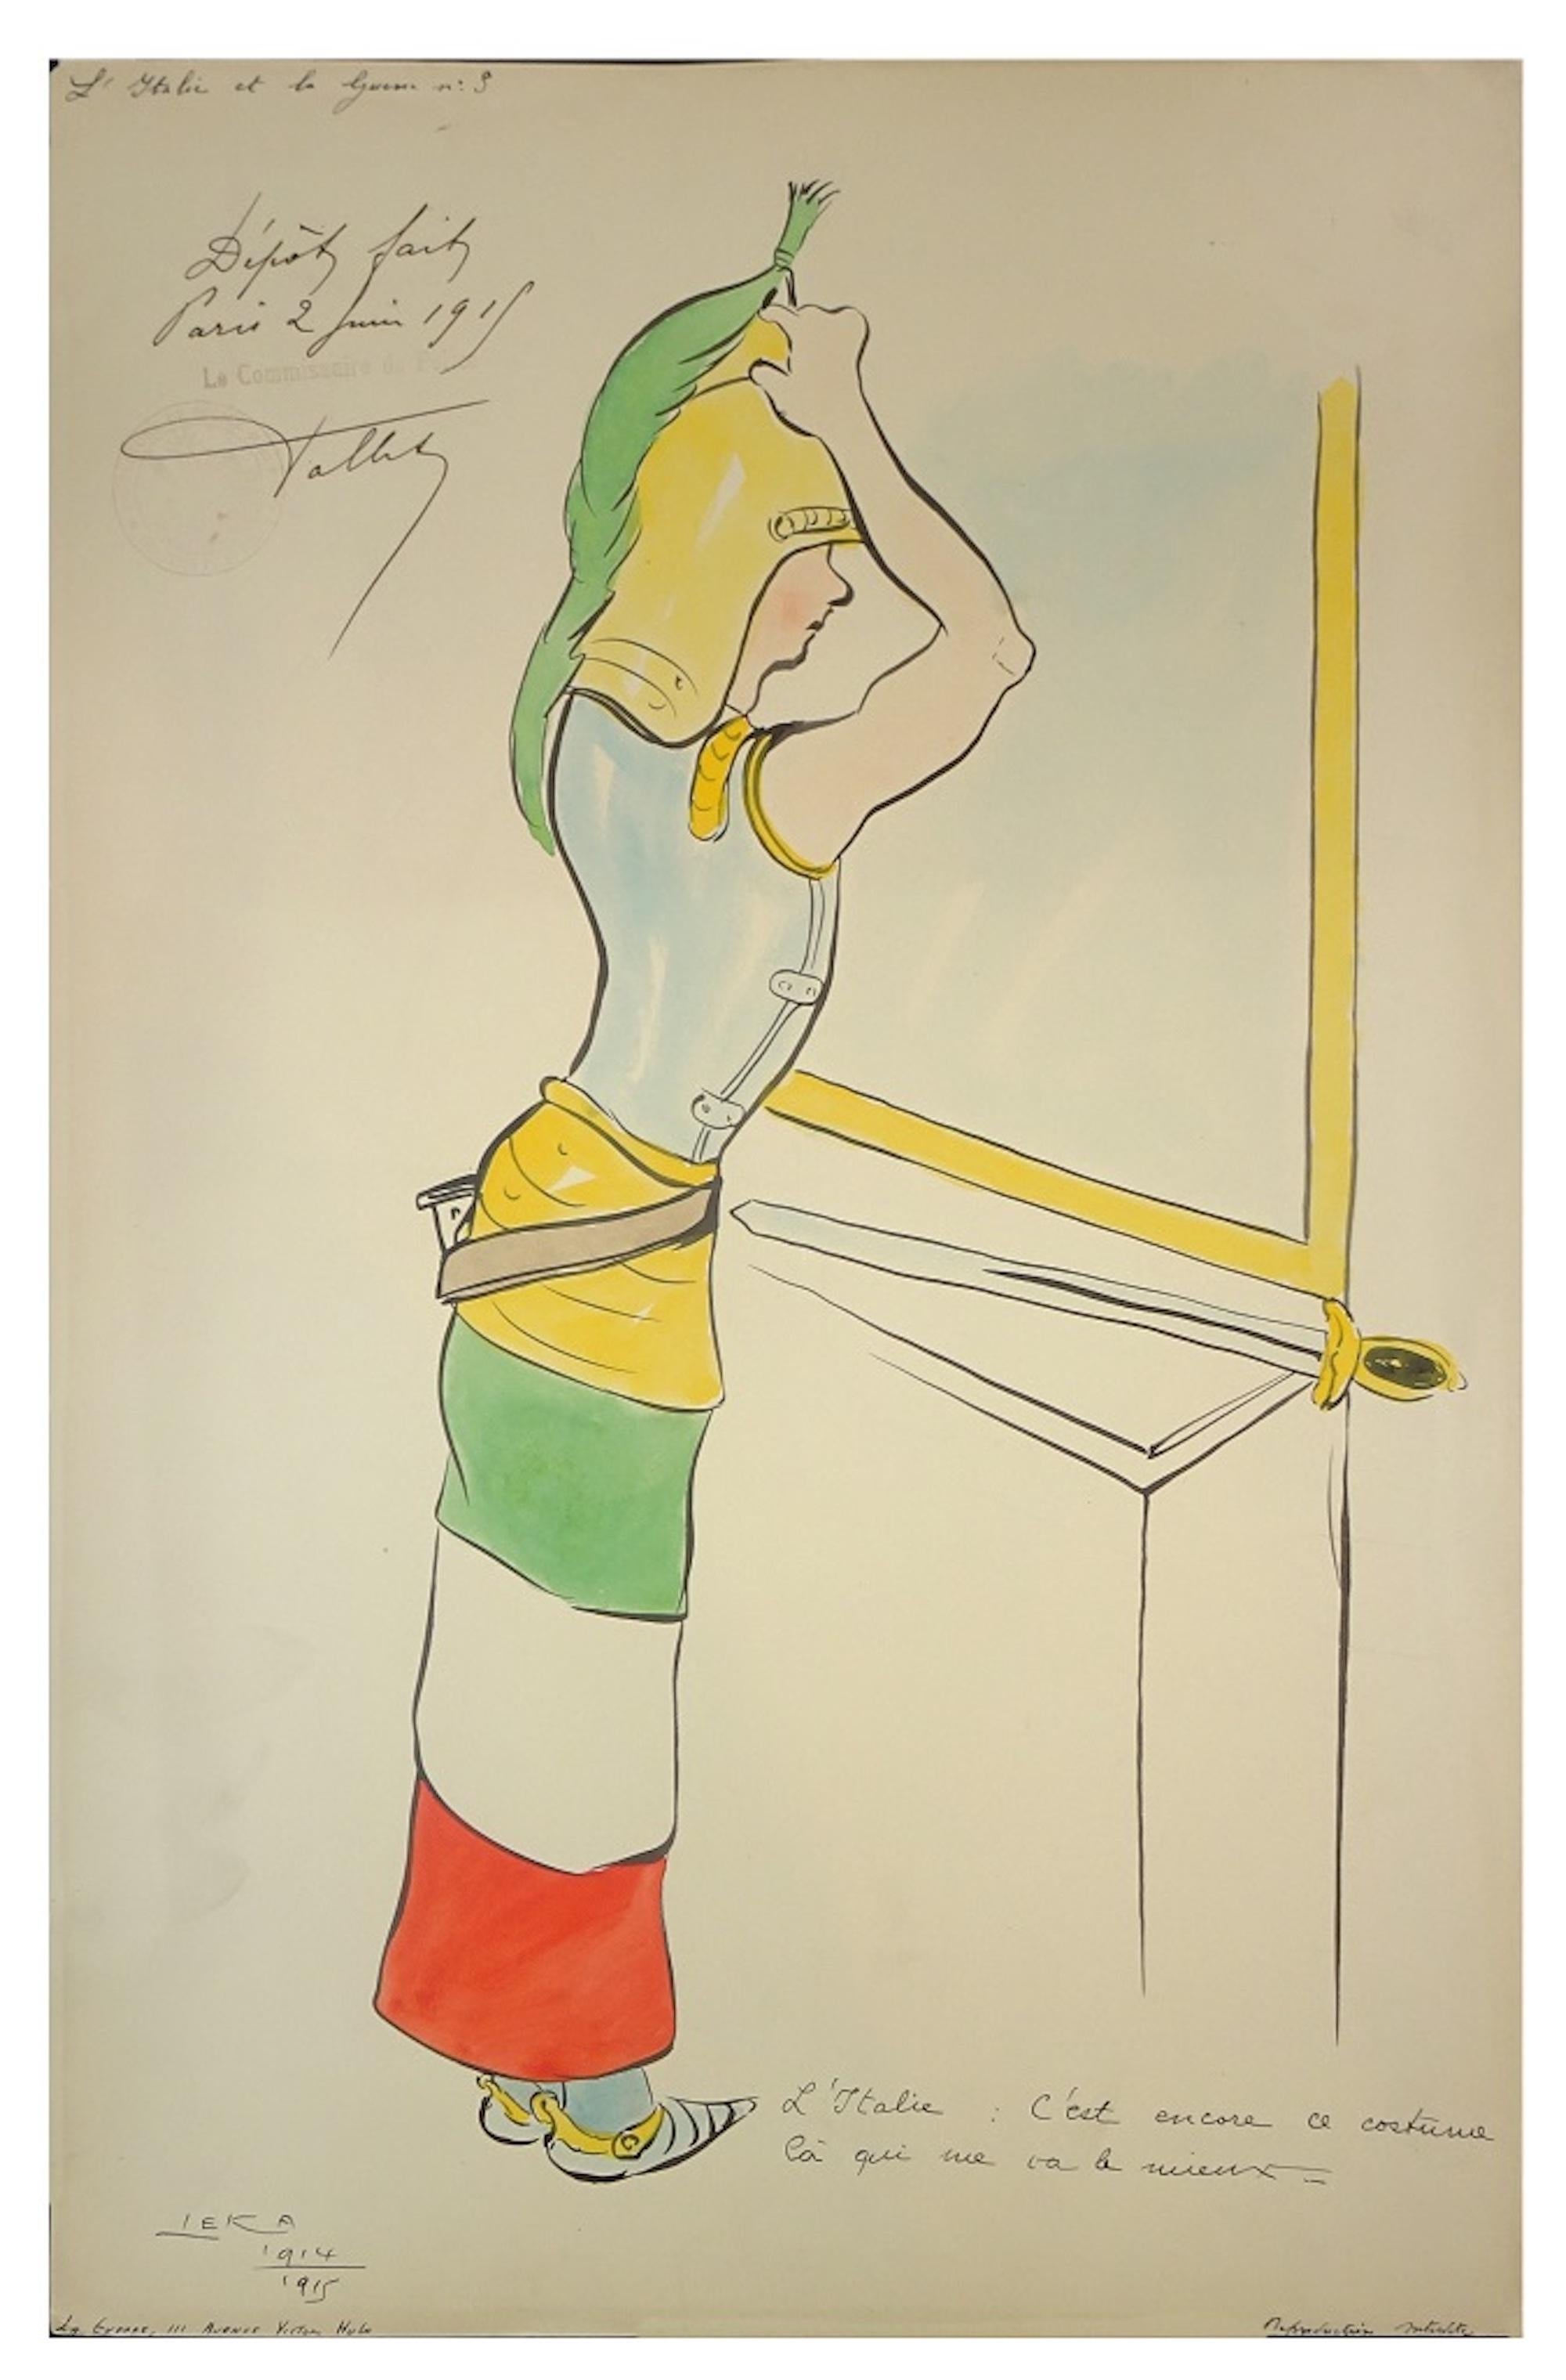 L'Italie - Original Drawing by Leka - 1910s